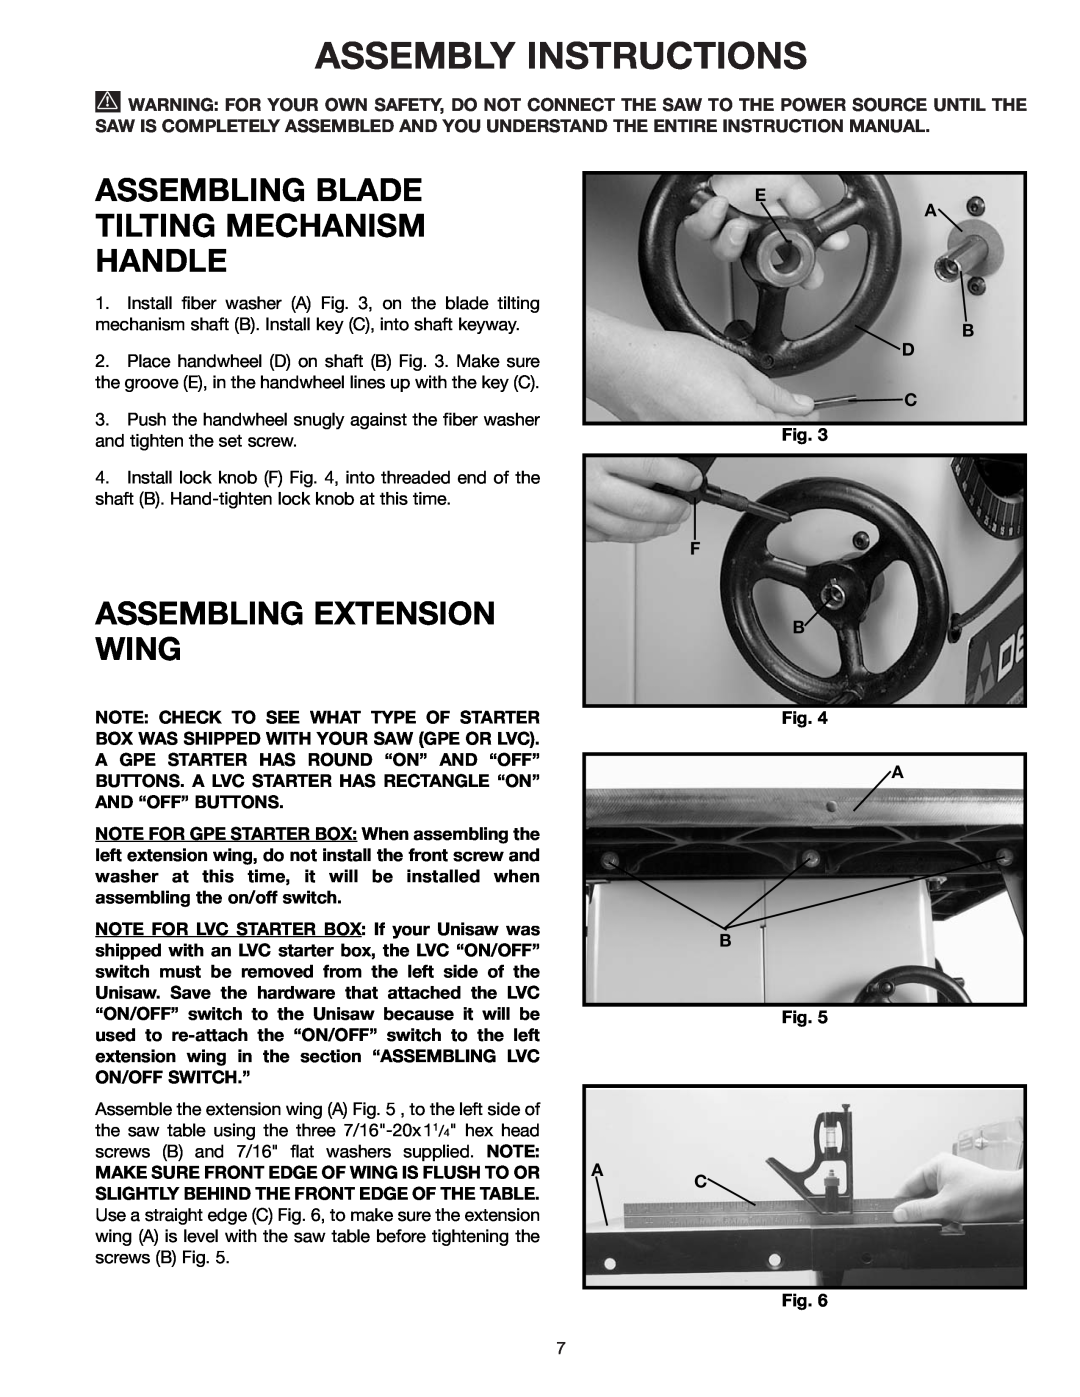 Delta 34-801, 36-812 Assembly Instructions, Assembling Blade Tilting Mechanism Handle, Assembling Extension Wing, Fig. C 